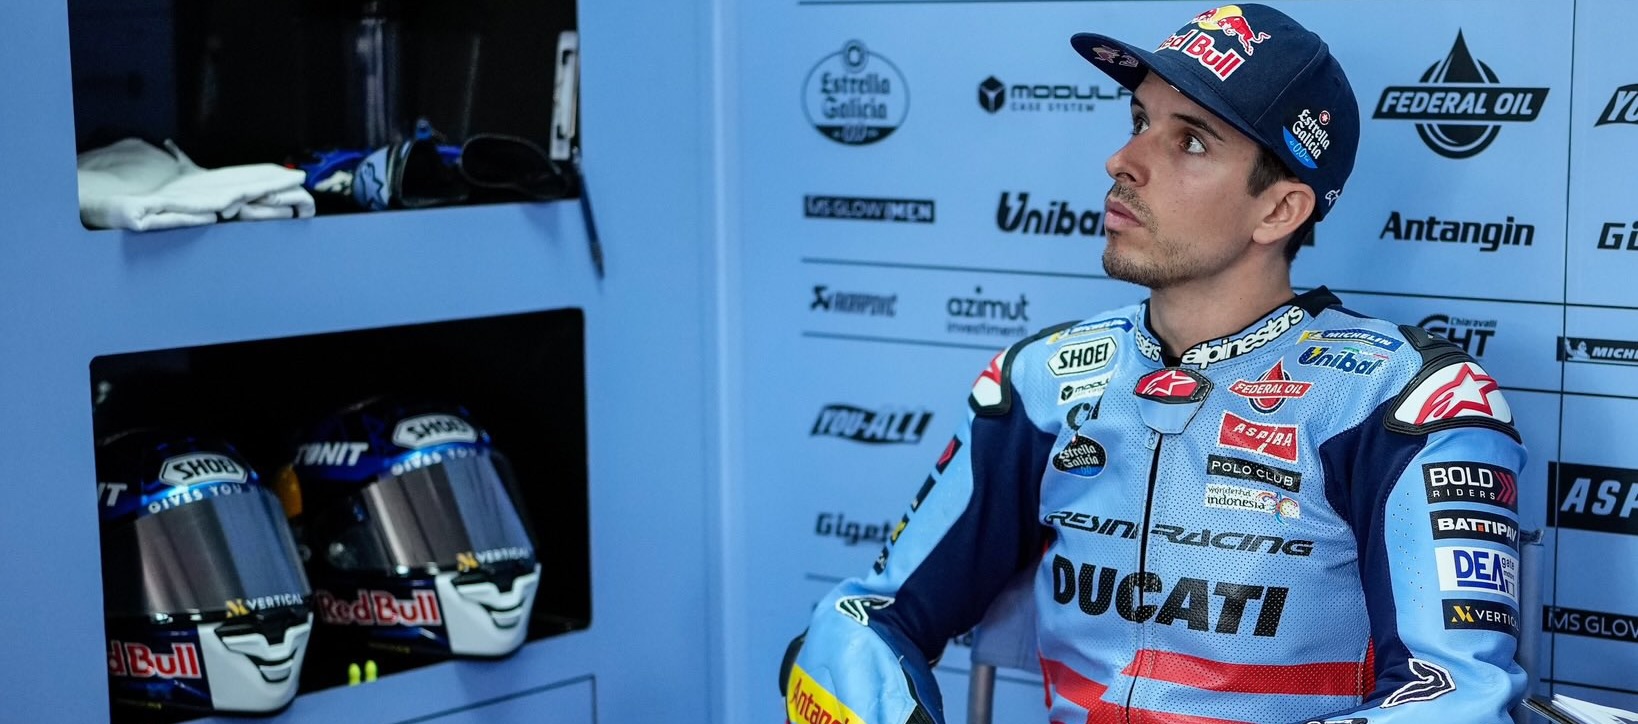 Masih Cedera, Alex Marquez Mengundurkan Diri dari MotoGP Indonesia